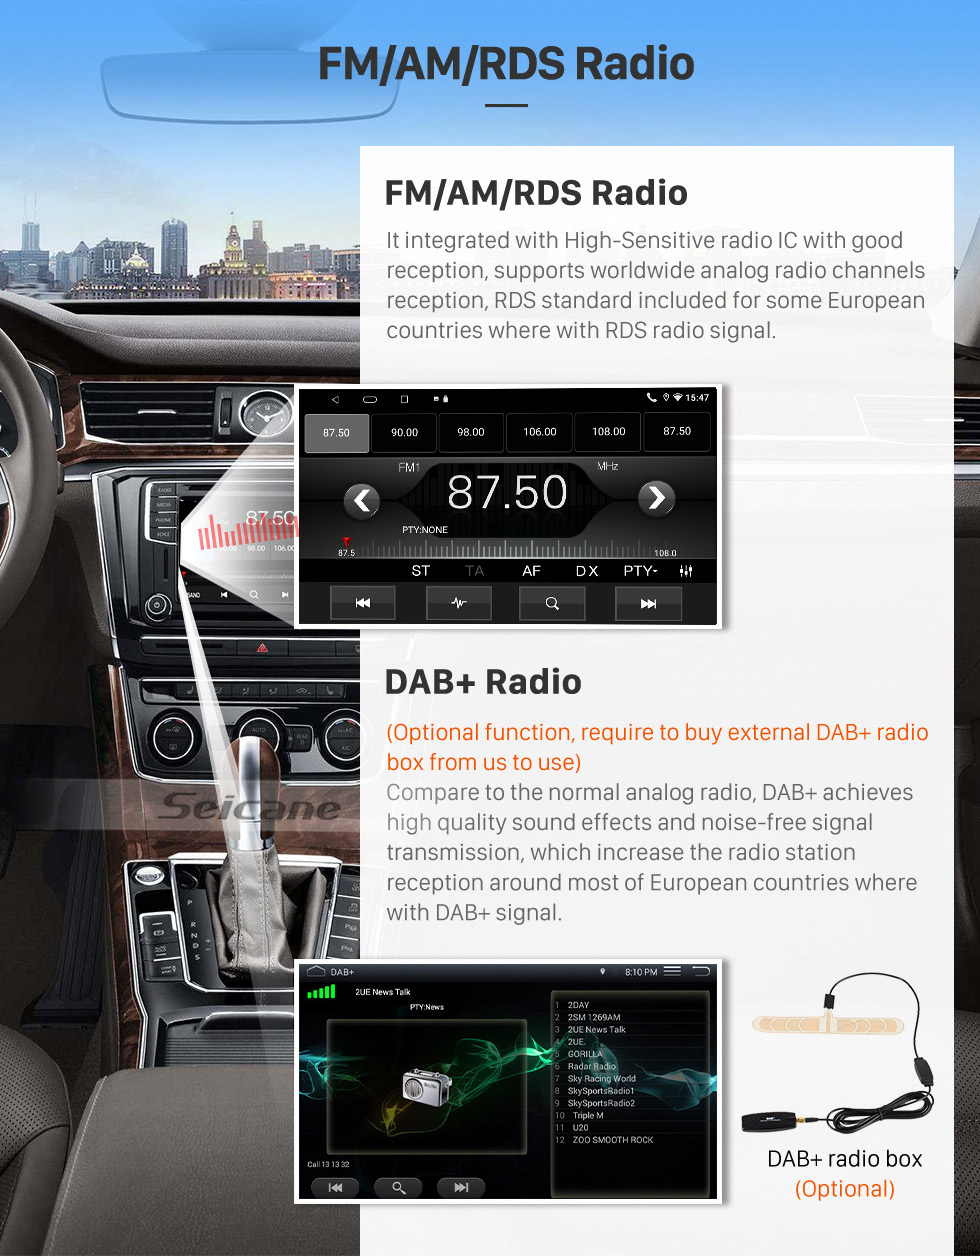 Seicane 7 inch Android 10.0 2 DIN Touchscreen Radio for Universal Toyota Hyundai Kia Nissan Volkswagen Suzuki Honda GPS Navigation System Bluetooth Music Backup Camera